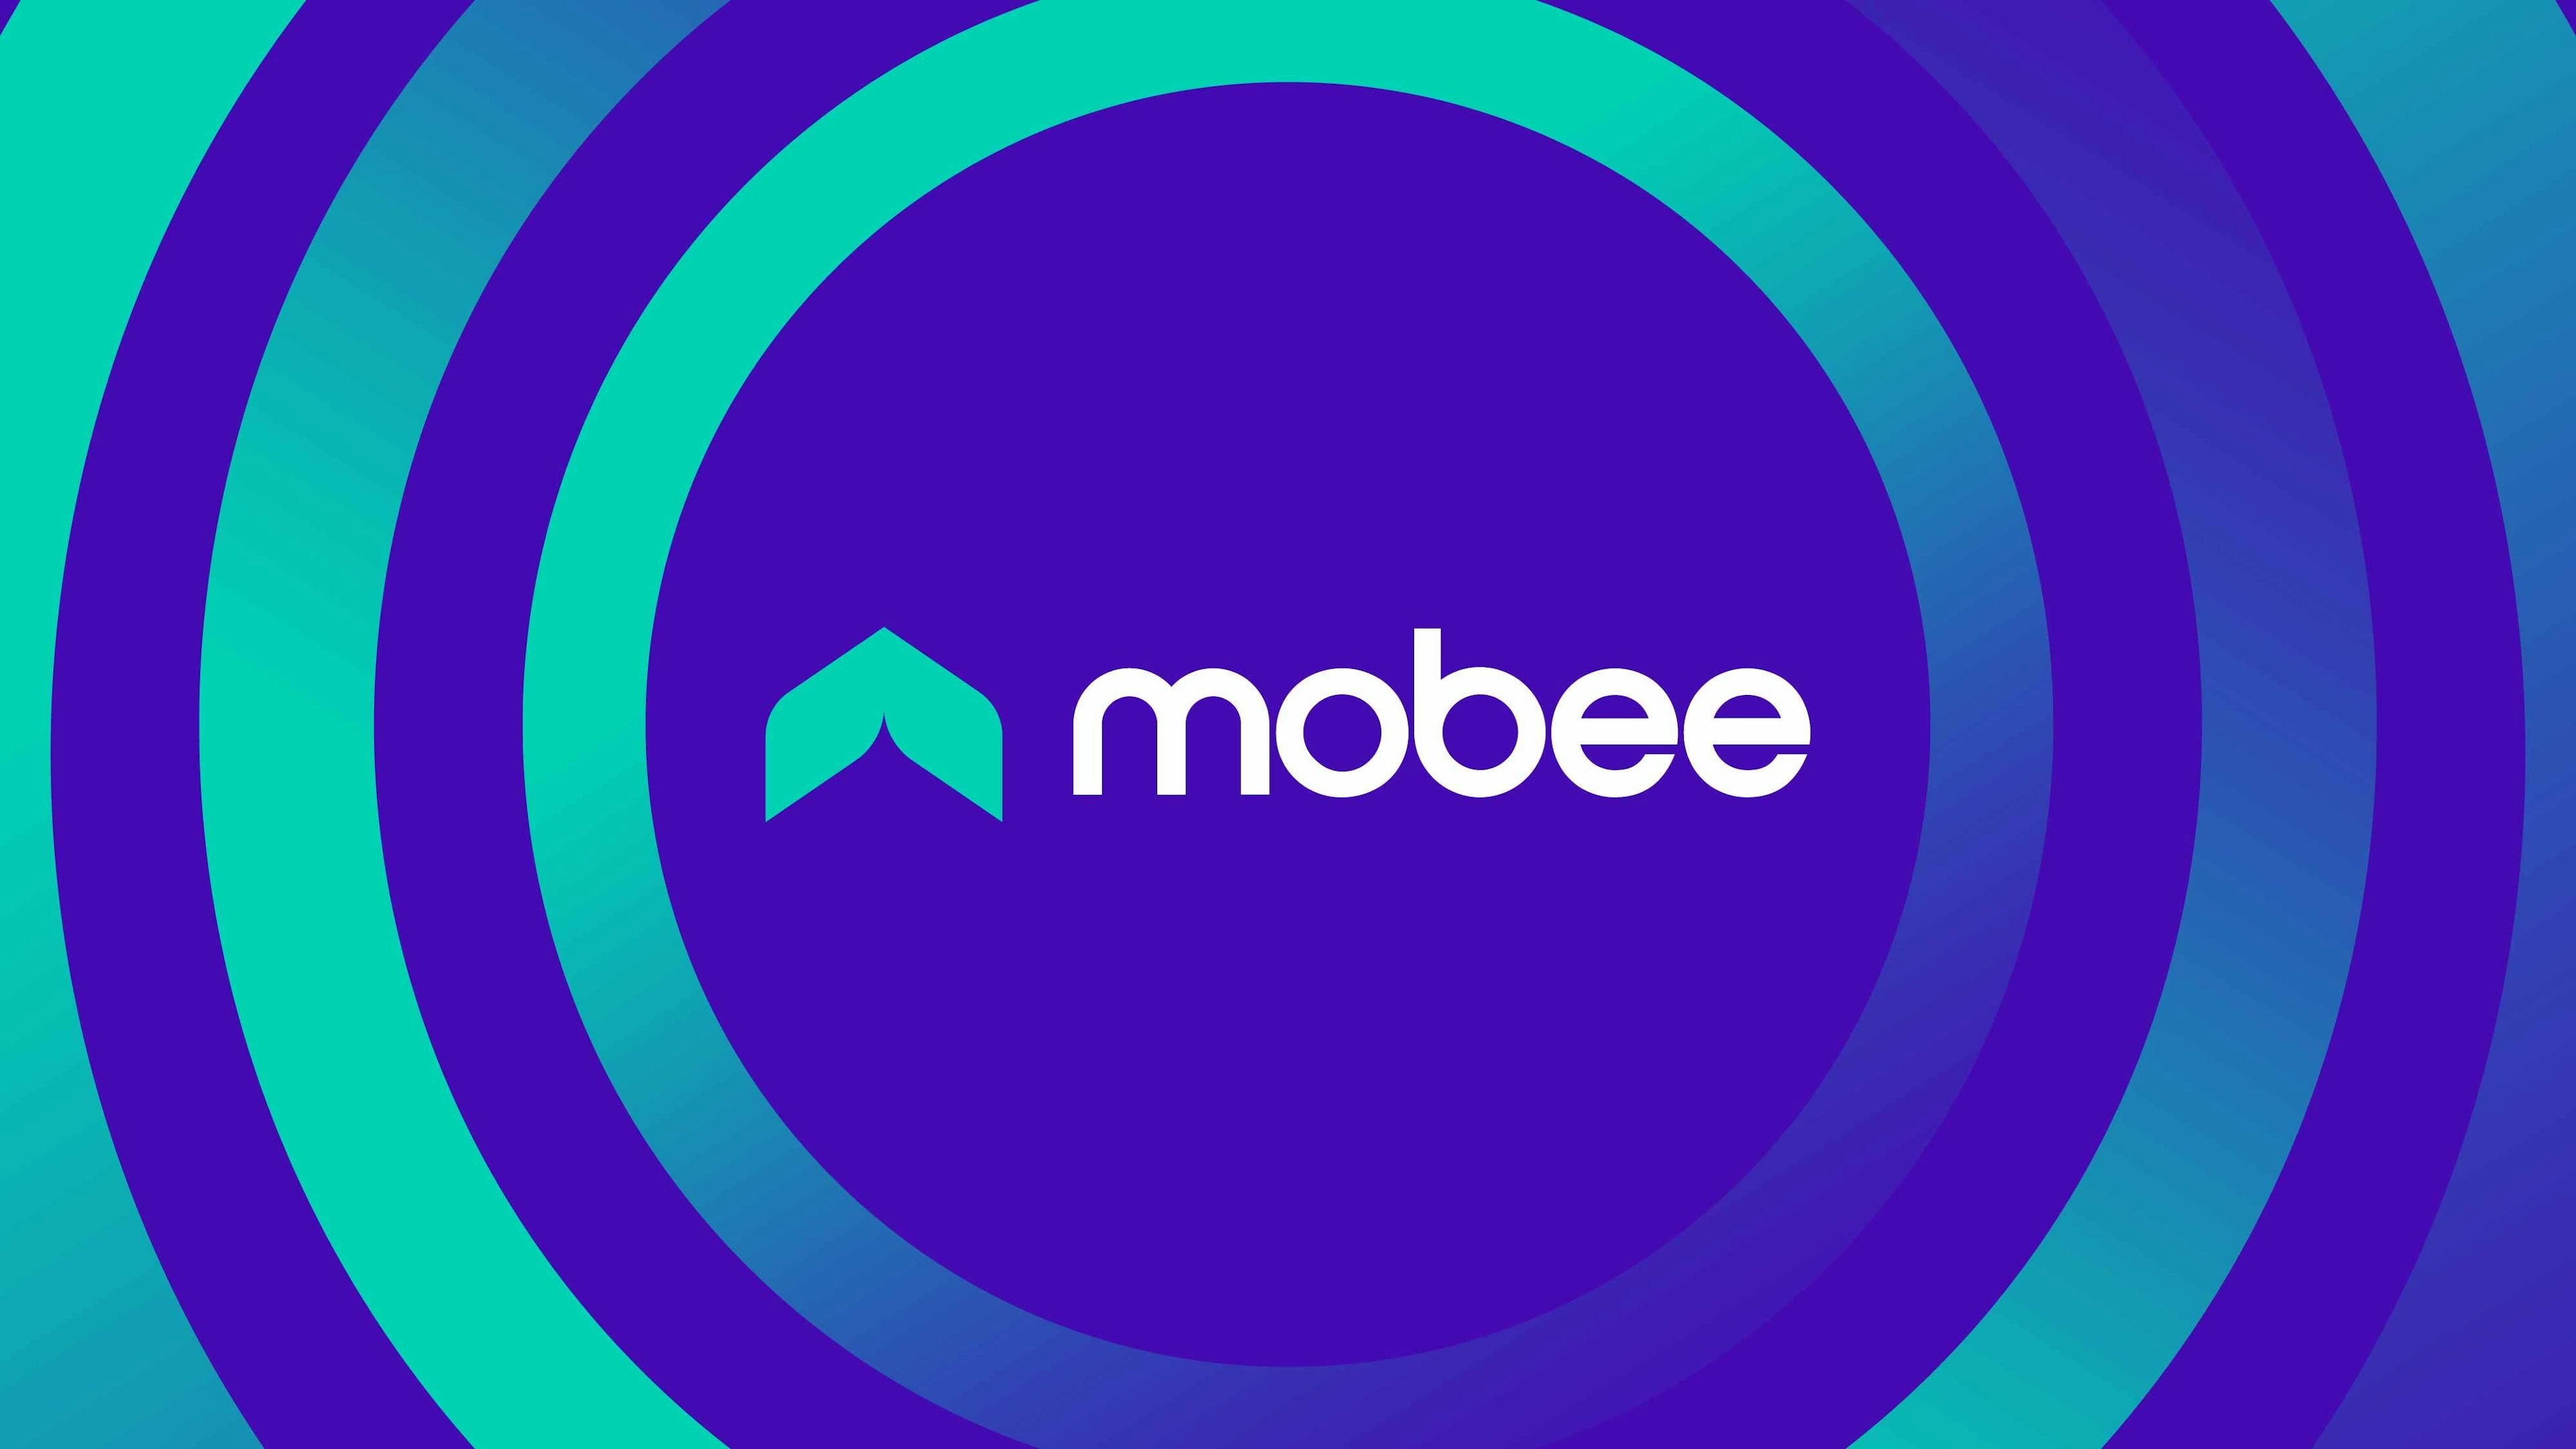 Indonesia Crypto Network (Mobee - Case Study)